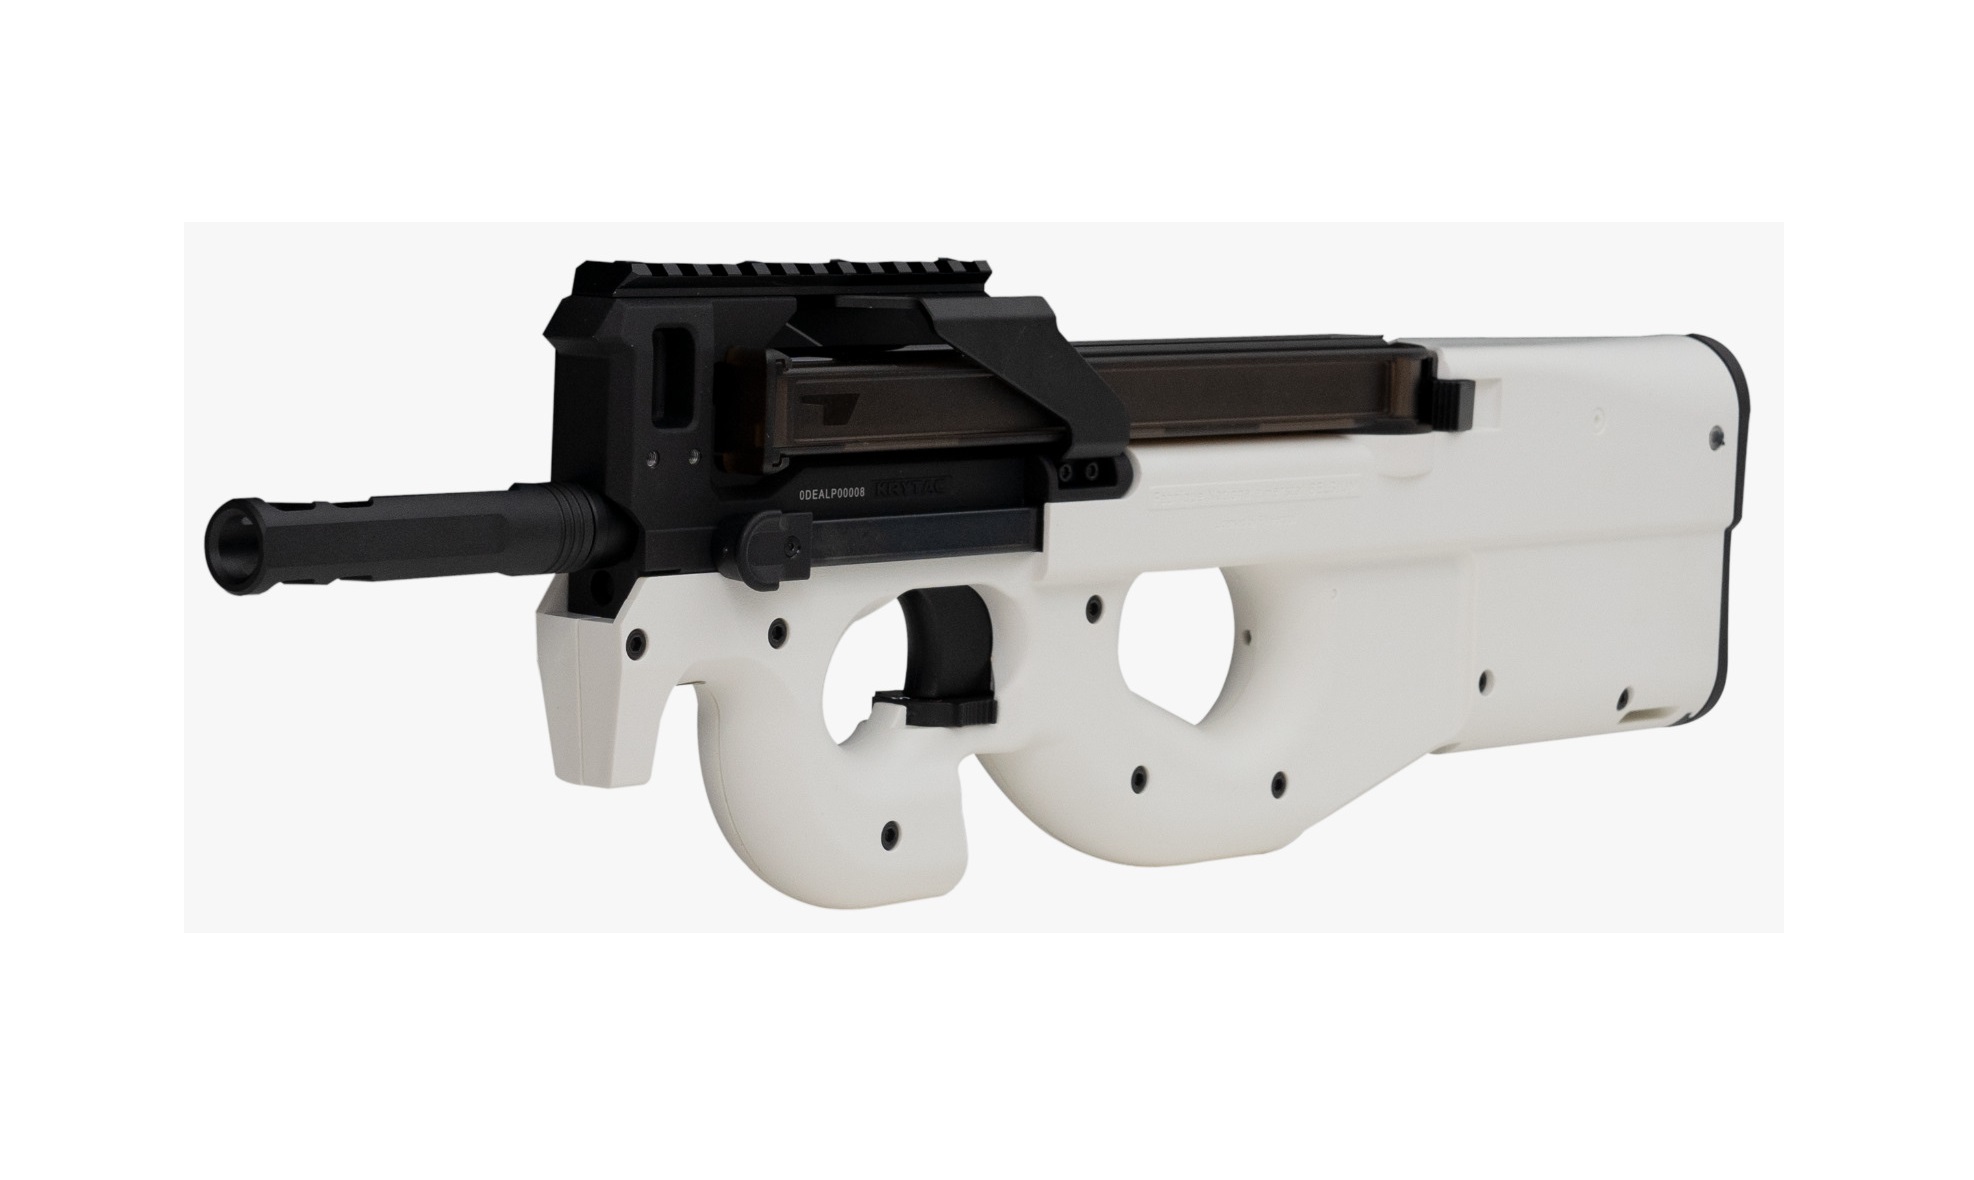 EMG FN P90 SMG - AEG - ALPINE CUSTOM EDITION